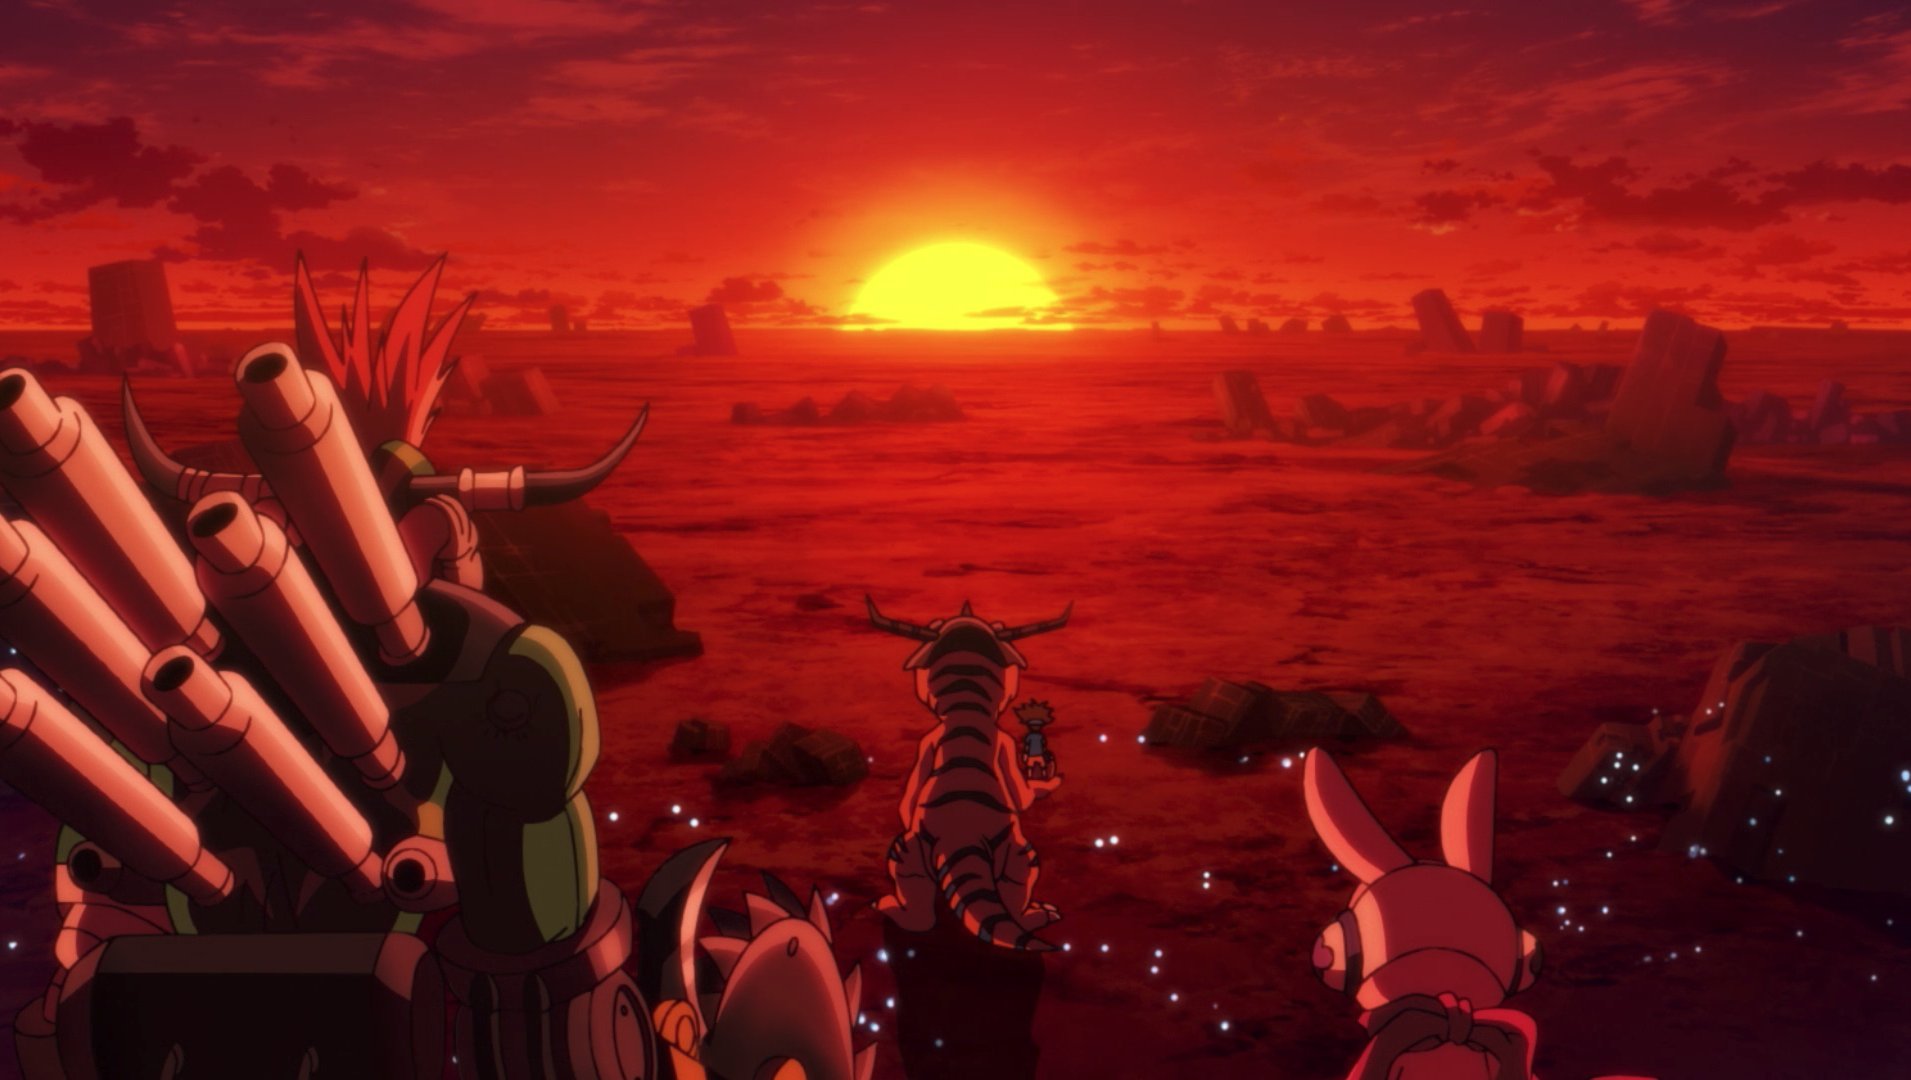 Digimon Adventure: (2020) Episodes 54 + 55